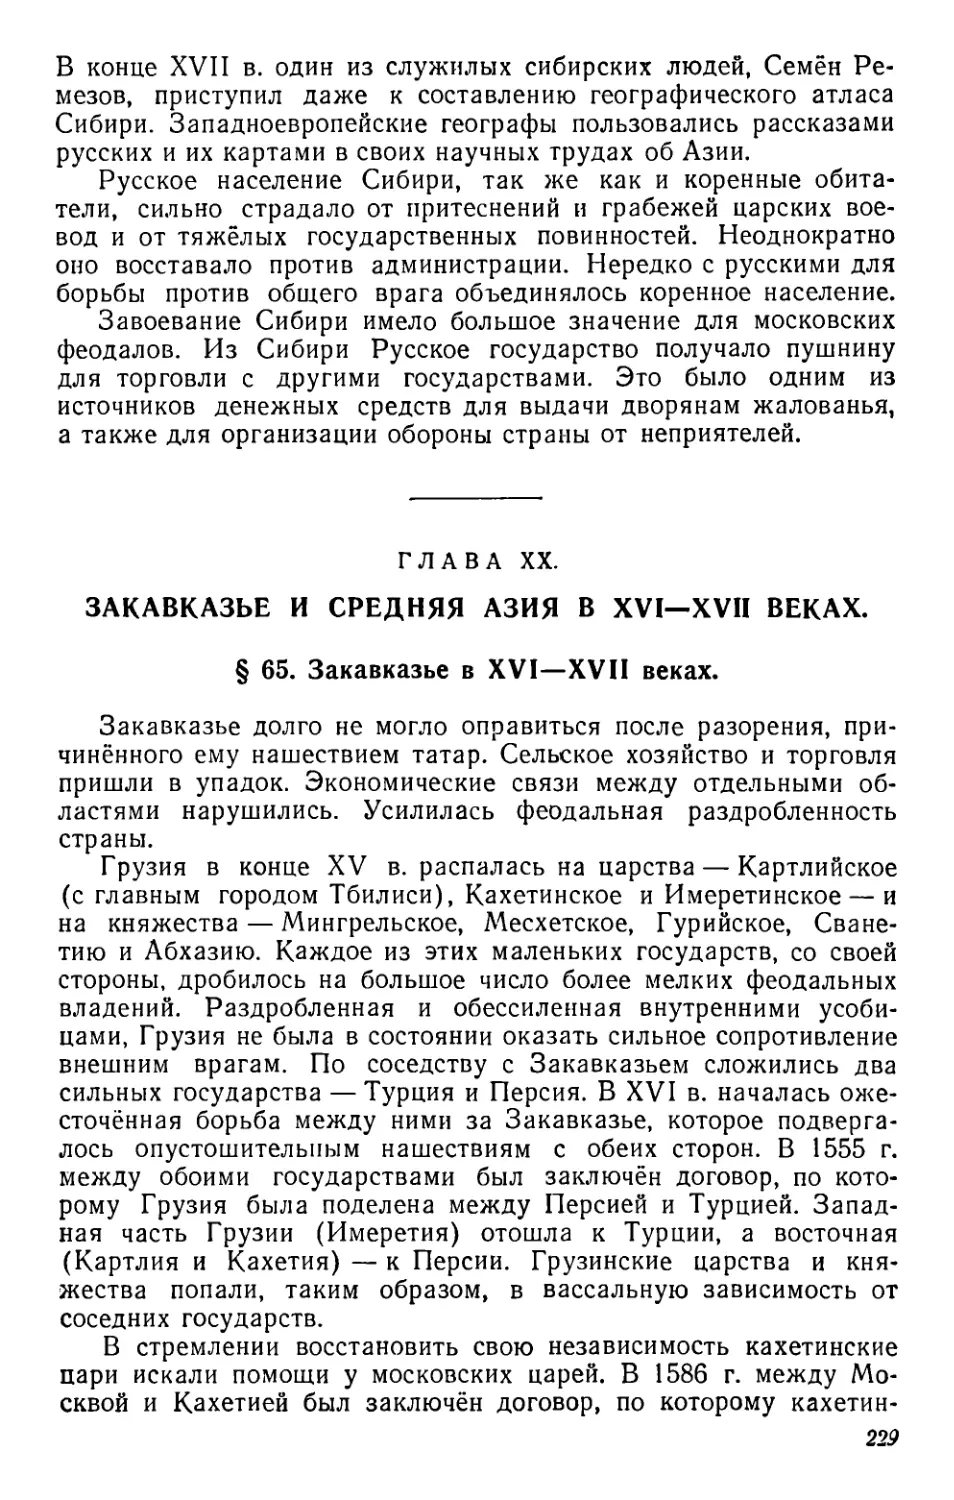 Глава XX. Закавказье и Средняя Азия в XVI—XVII веках